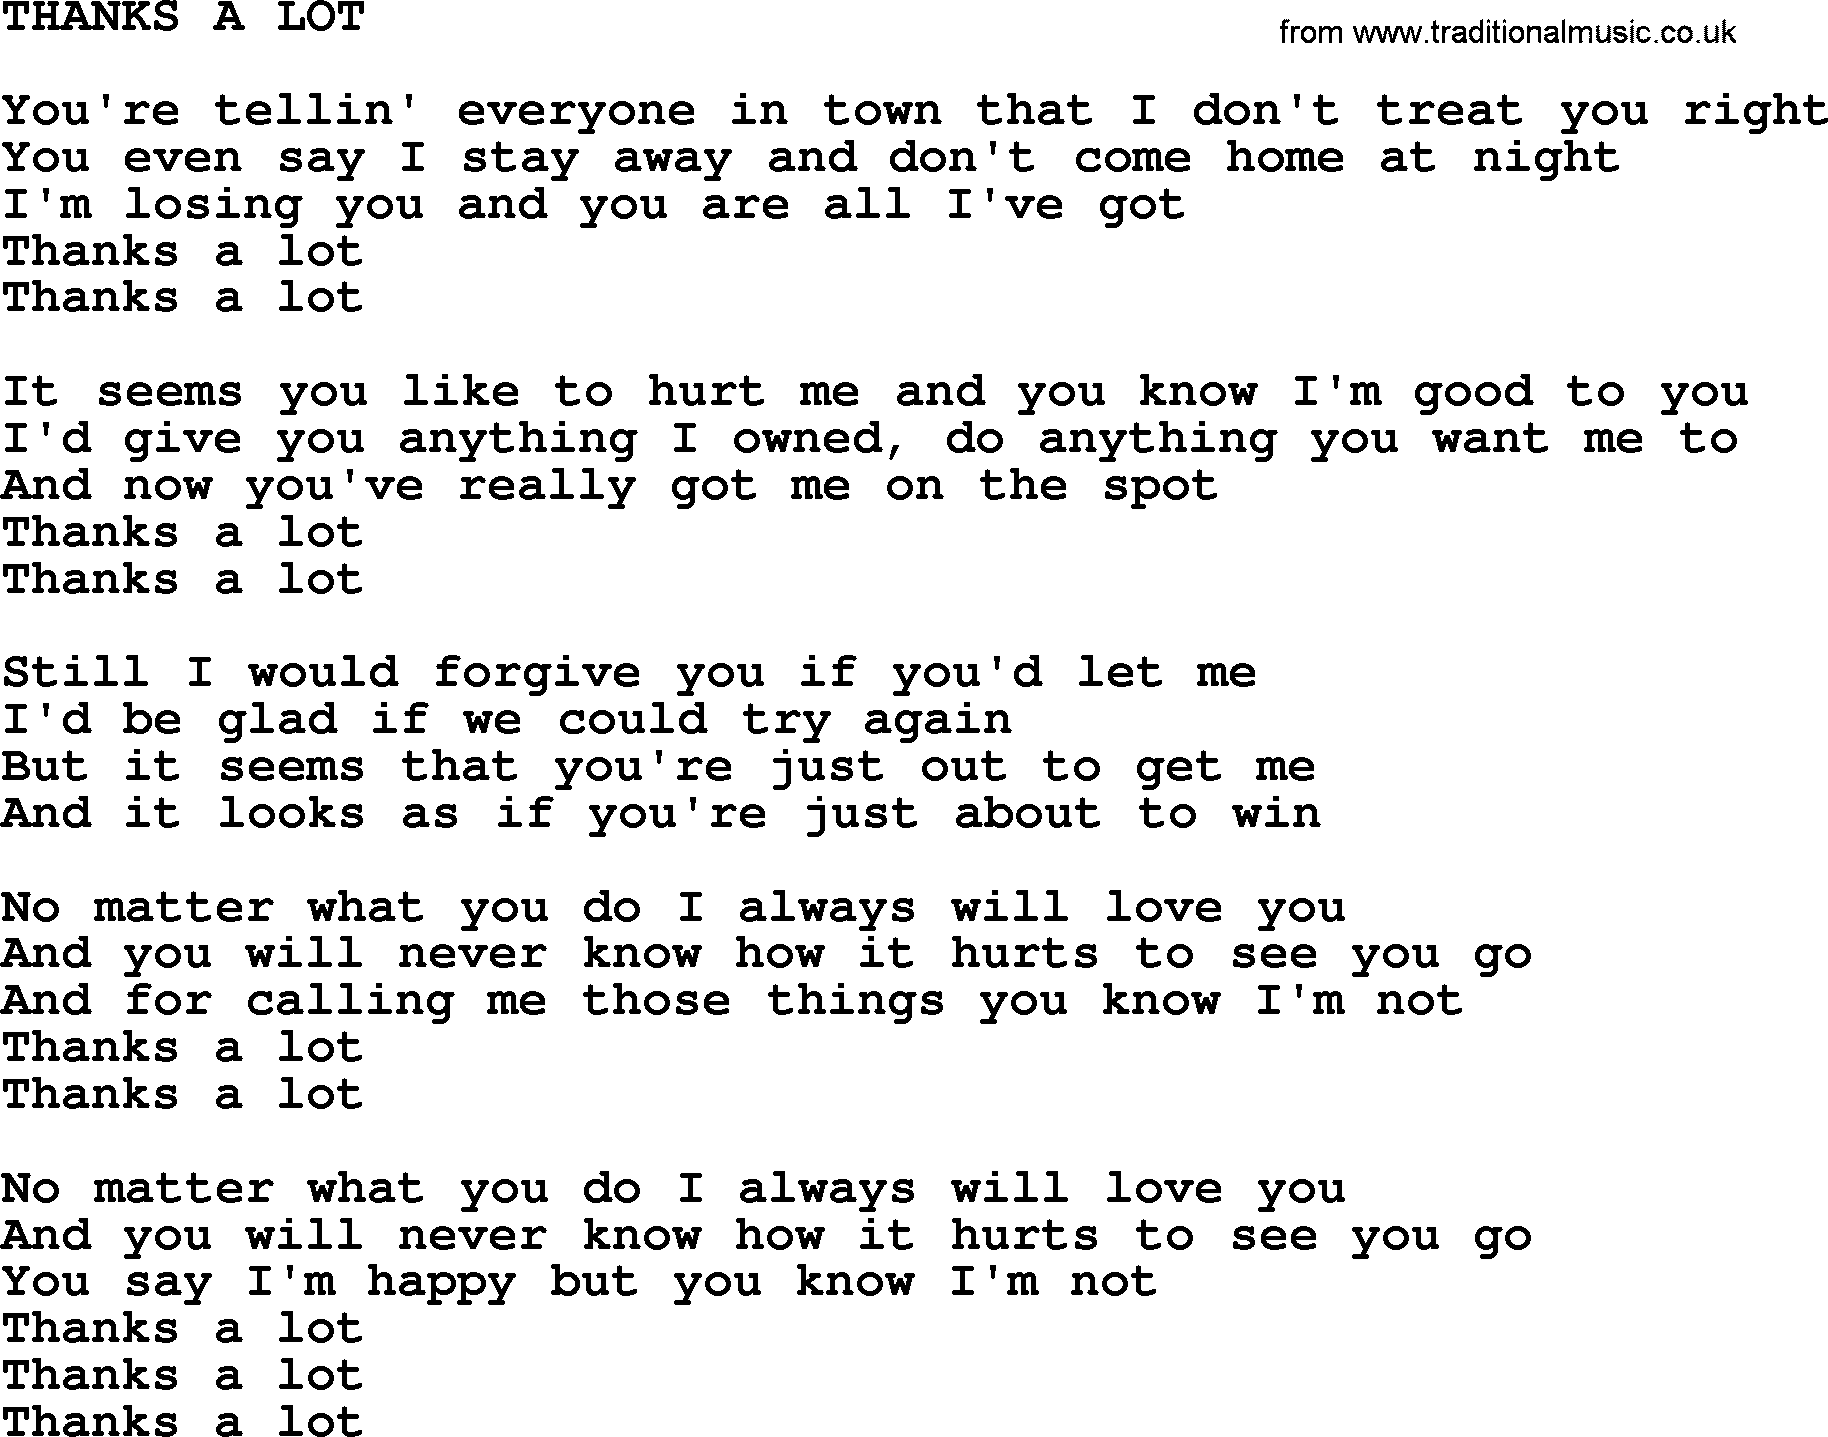 Johnny Cash song: Thanks A Lot, lyrics